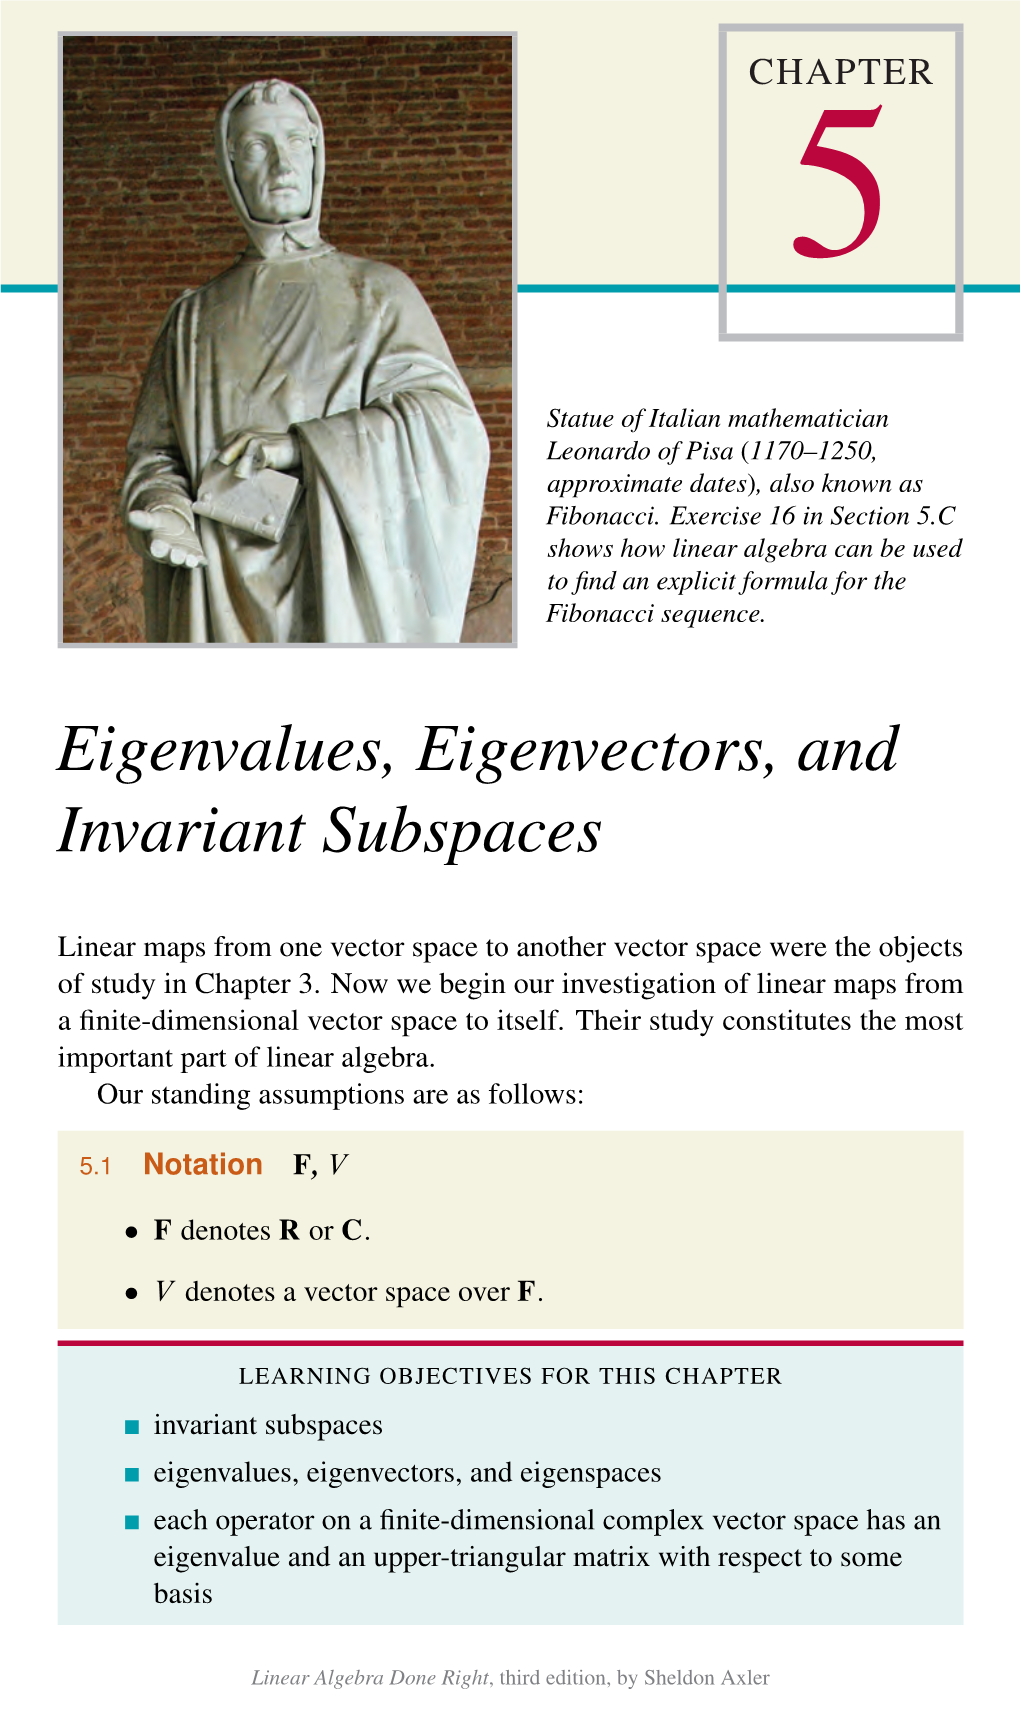 Eigenvalues, Eigenvectors, and Invariant Subspaces